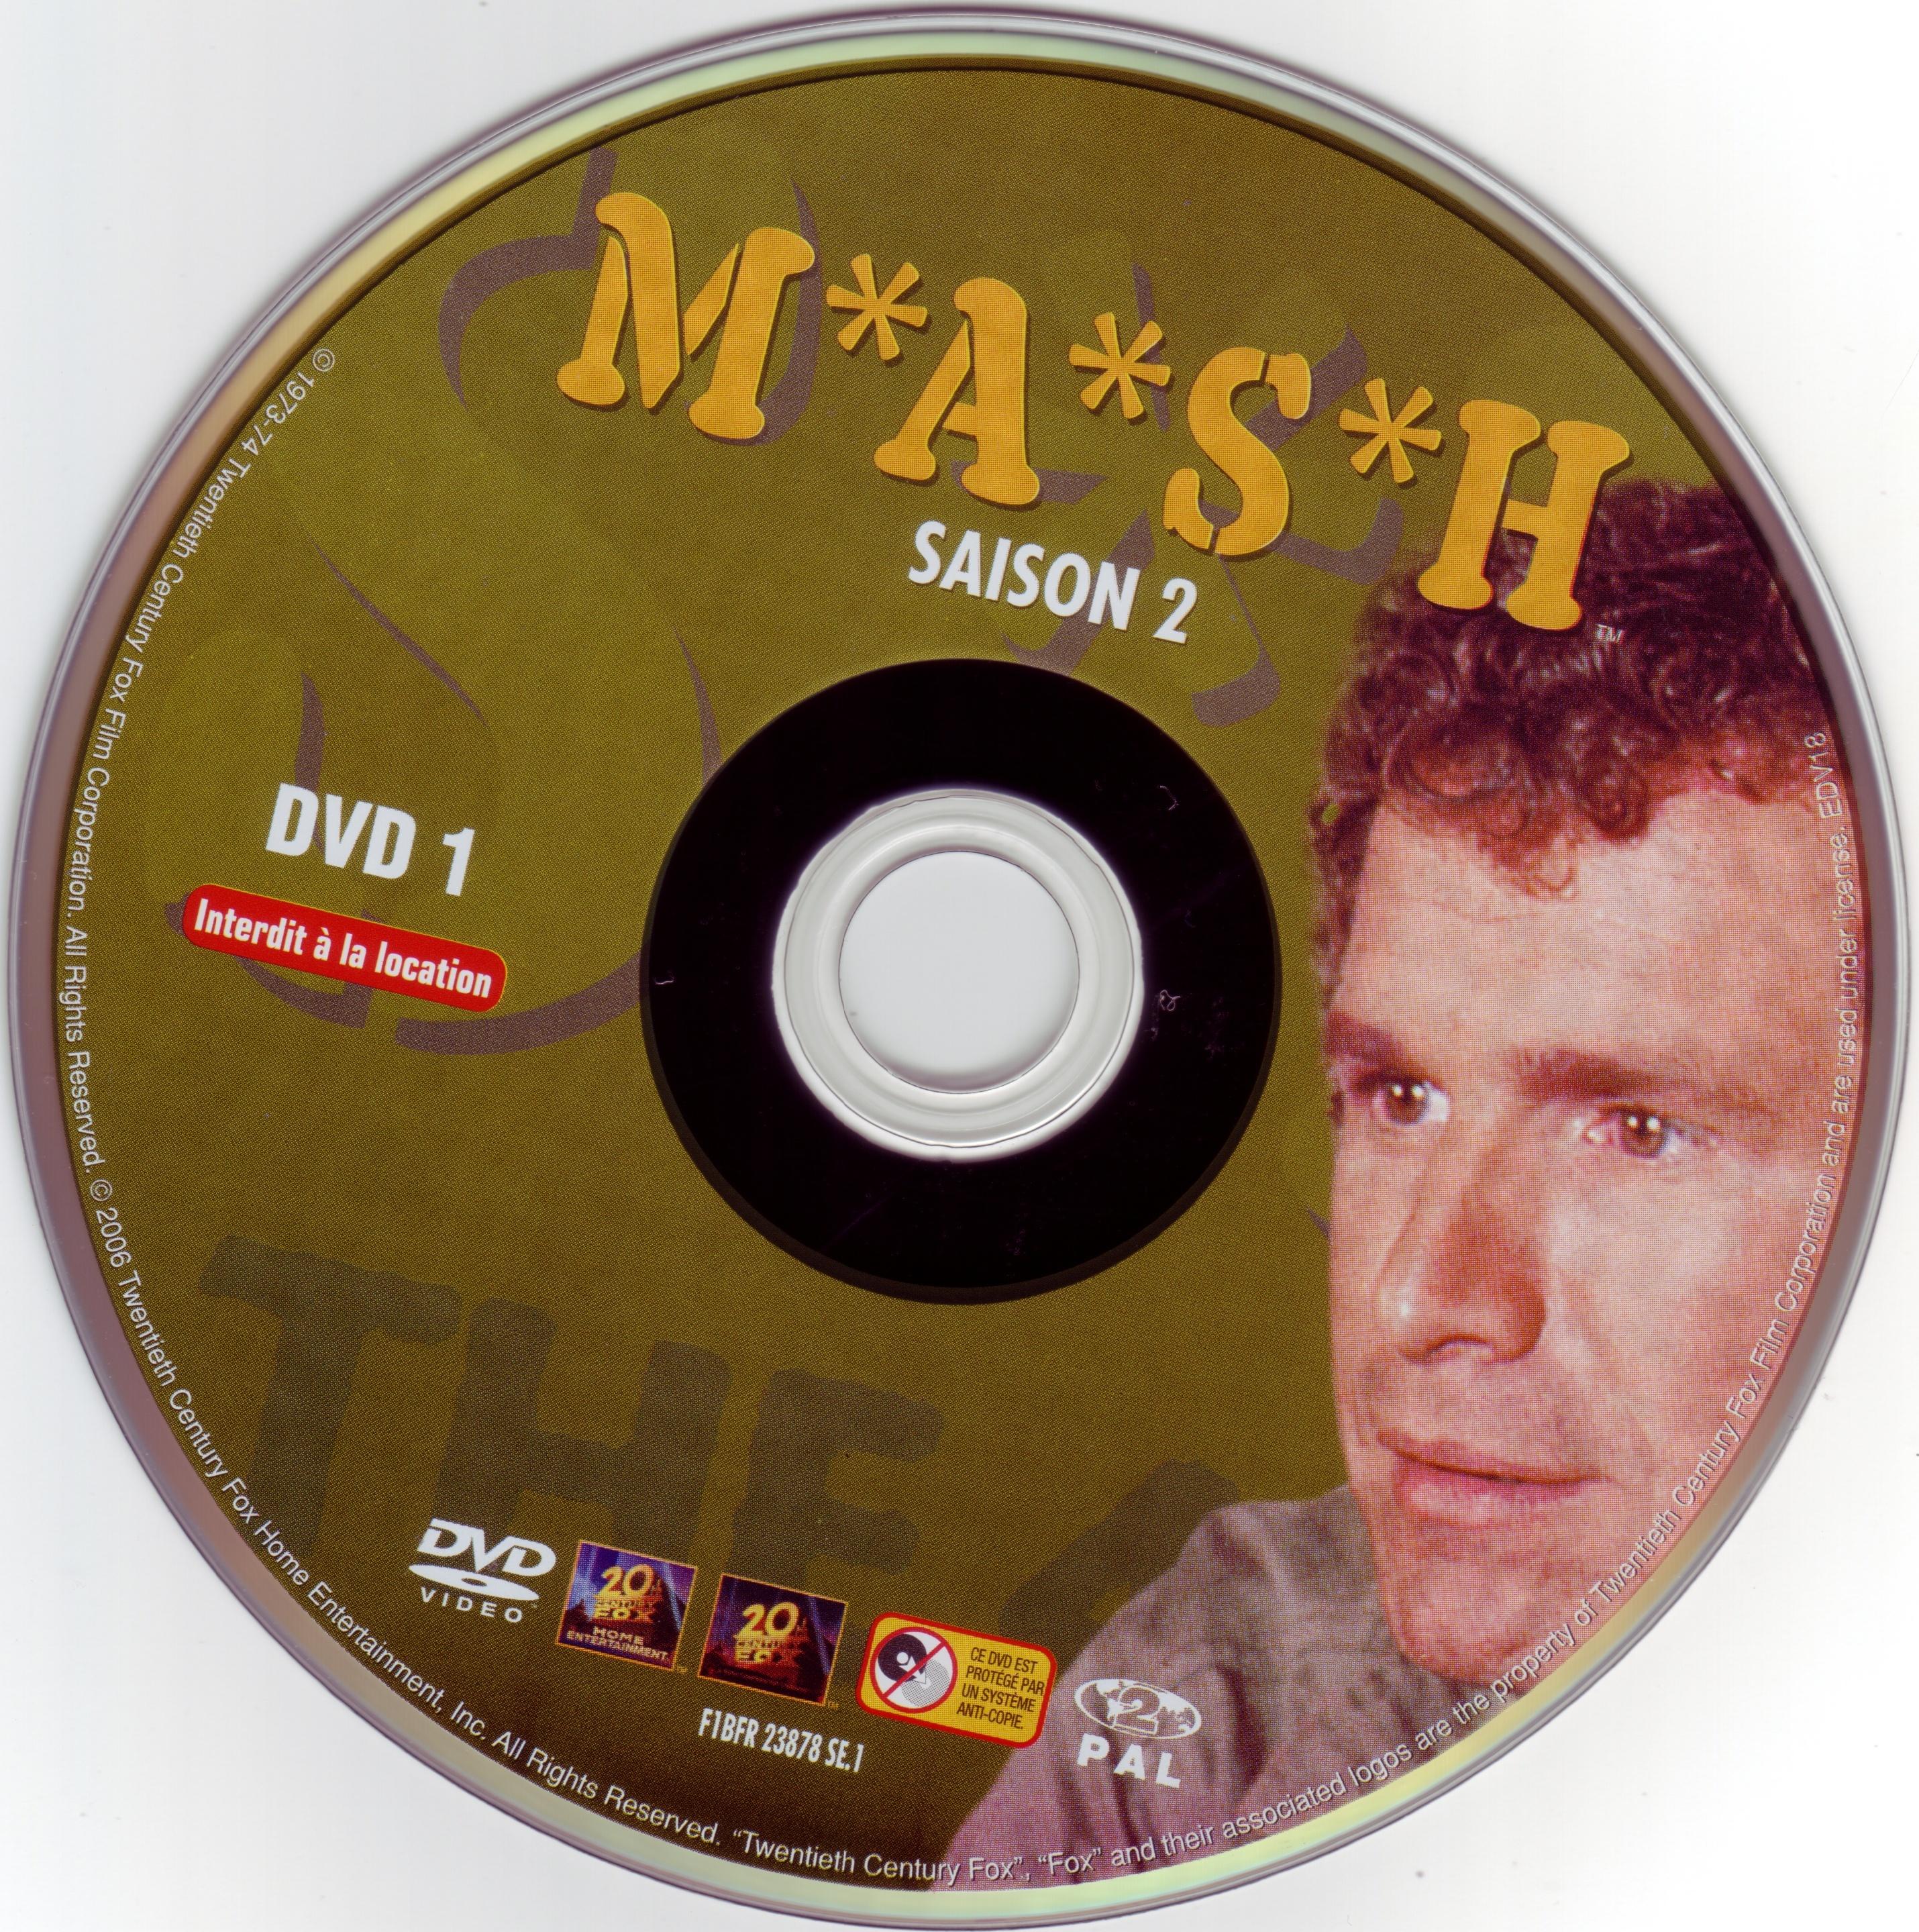 MASH Saison 2 DVD 1